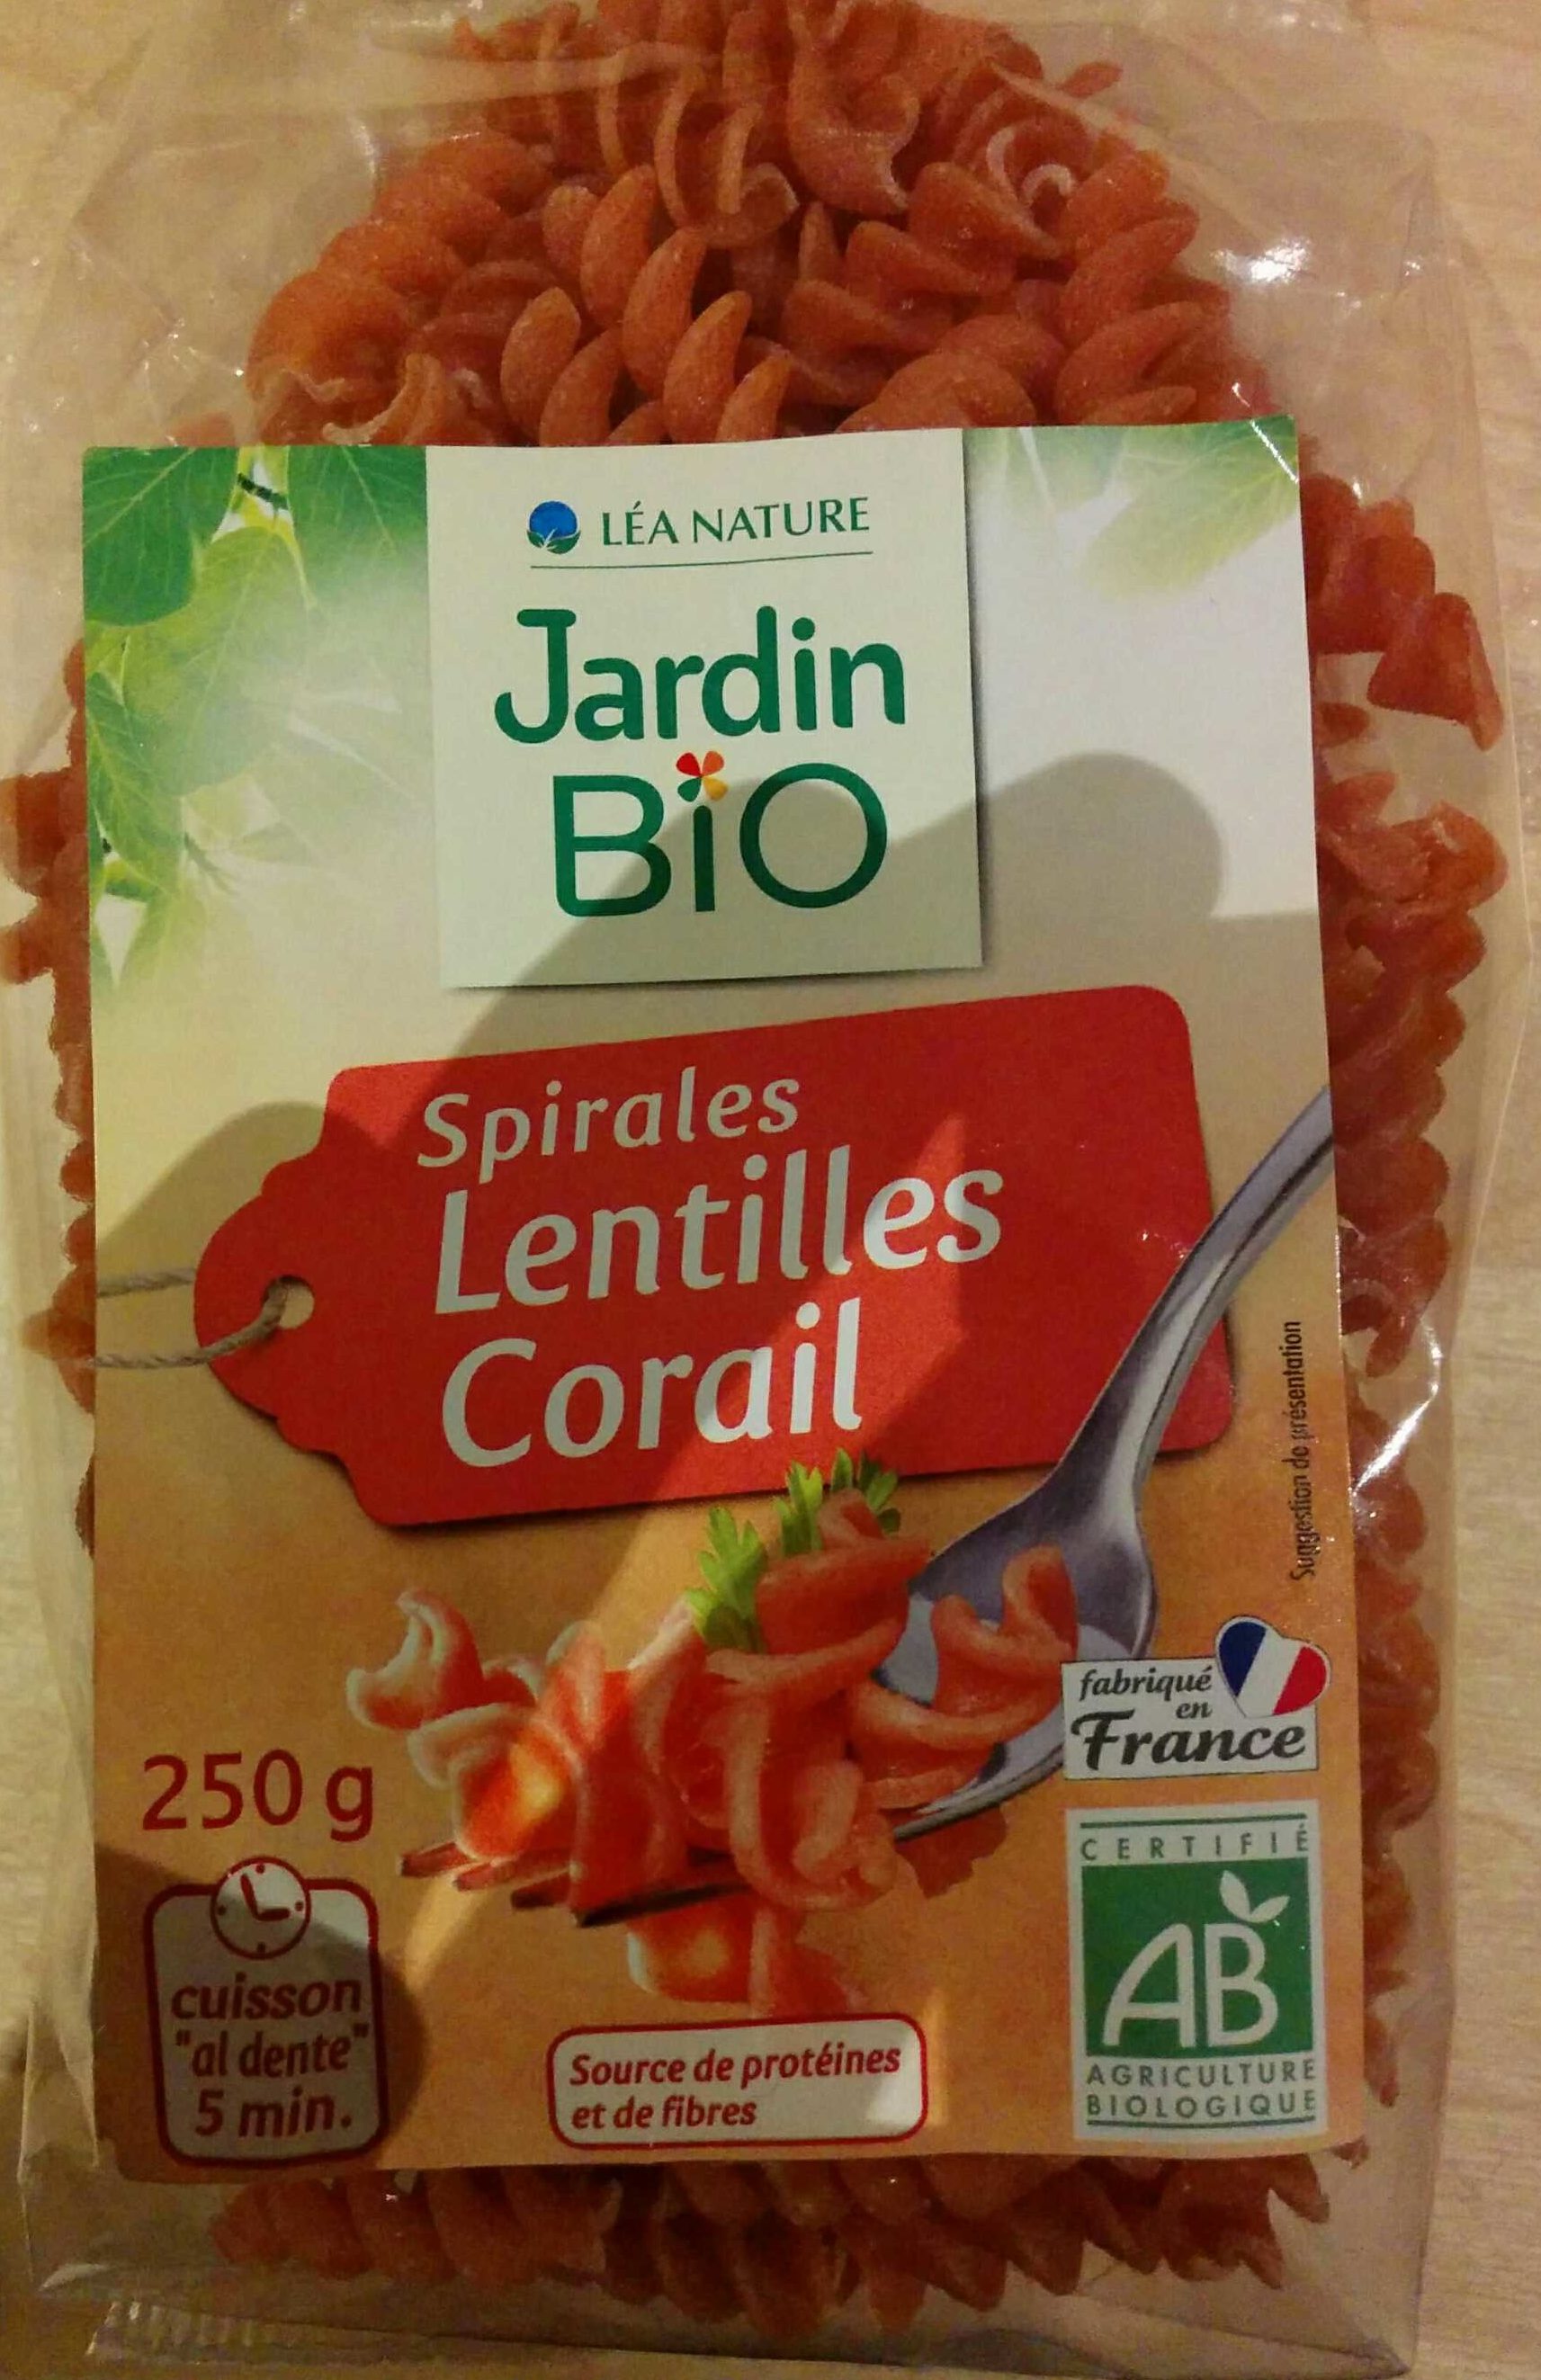 Jardin bio - Spirales lentilles corail - Product - fr